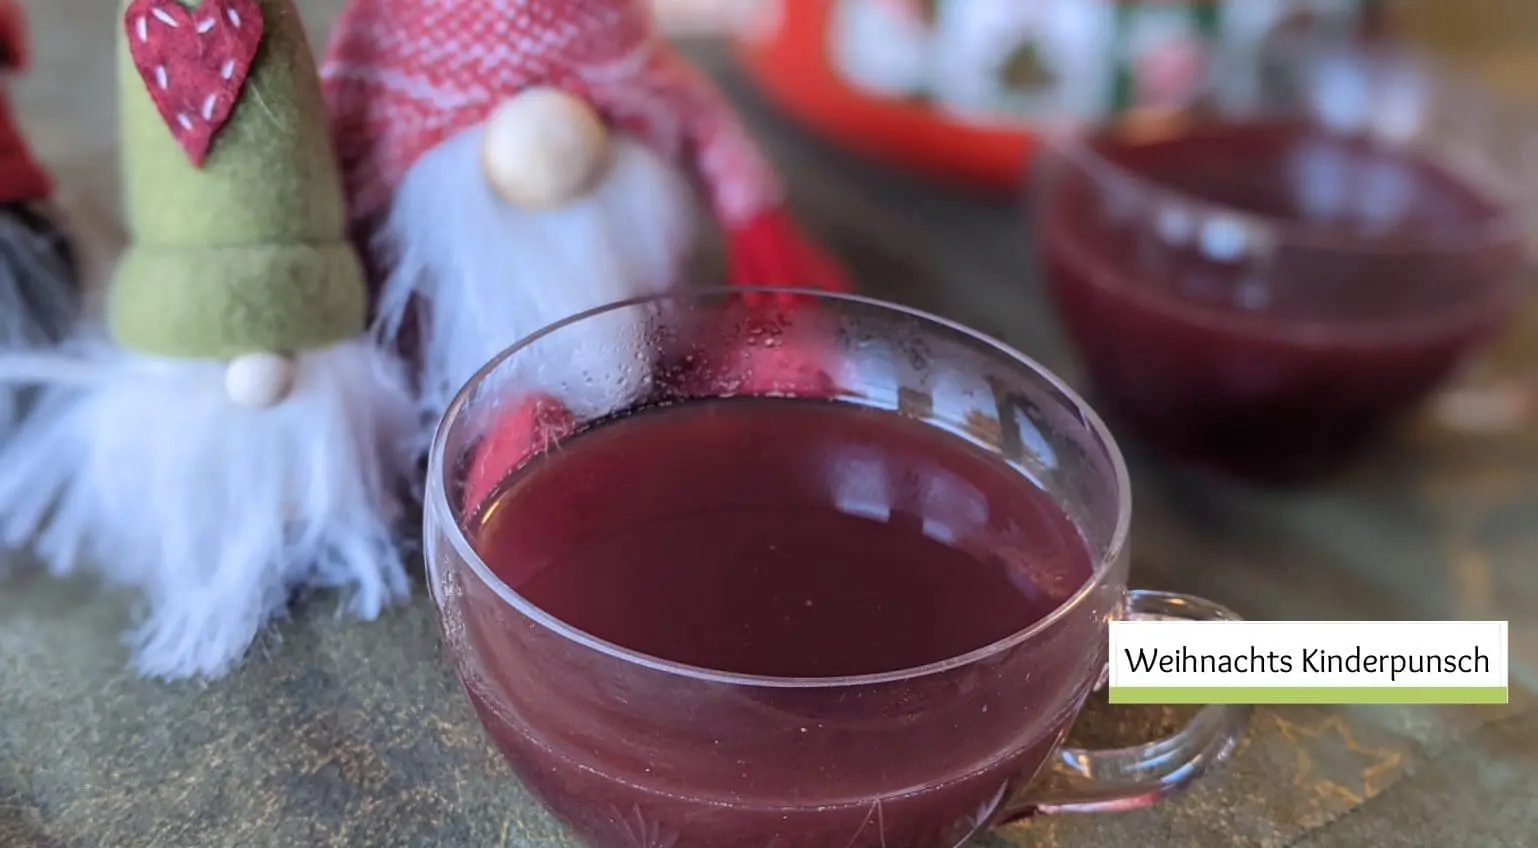 Weihnachts Kinderpunsch Recipe- Warm Christmas Drink for Kids